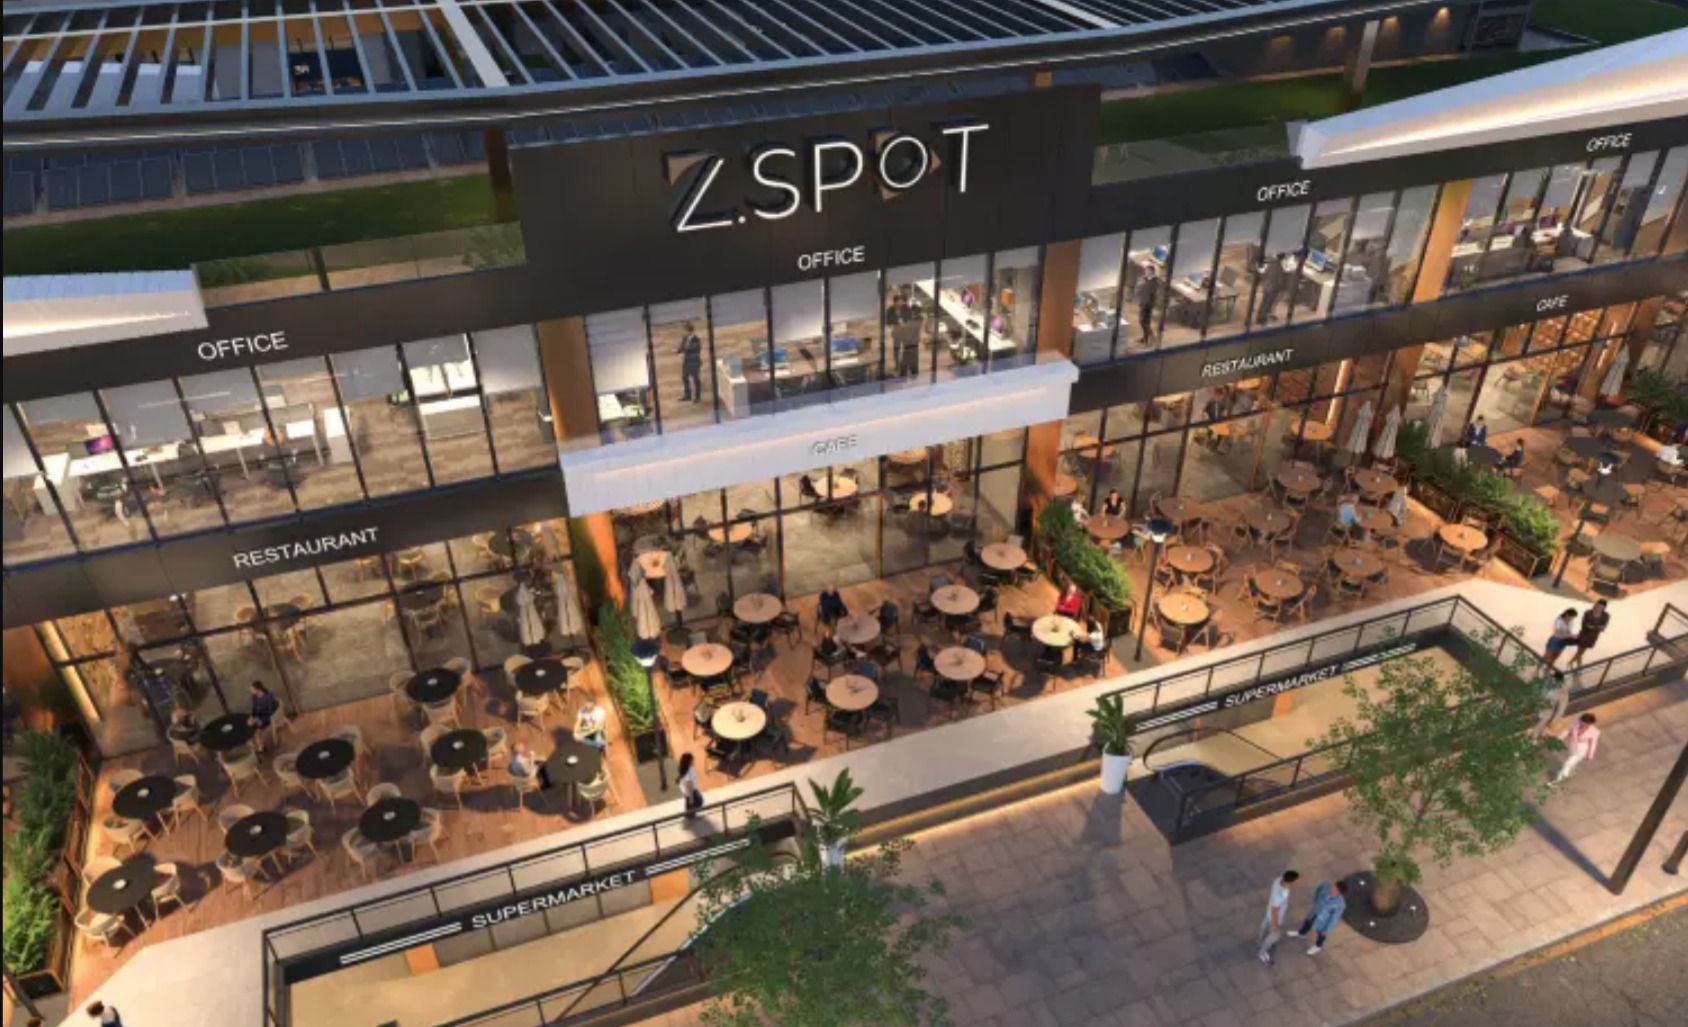 Z Spot Mall El Sheikh Zayed Jiwa Development